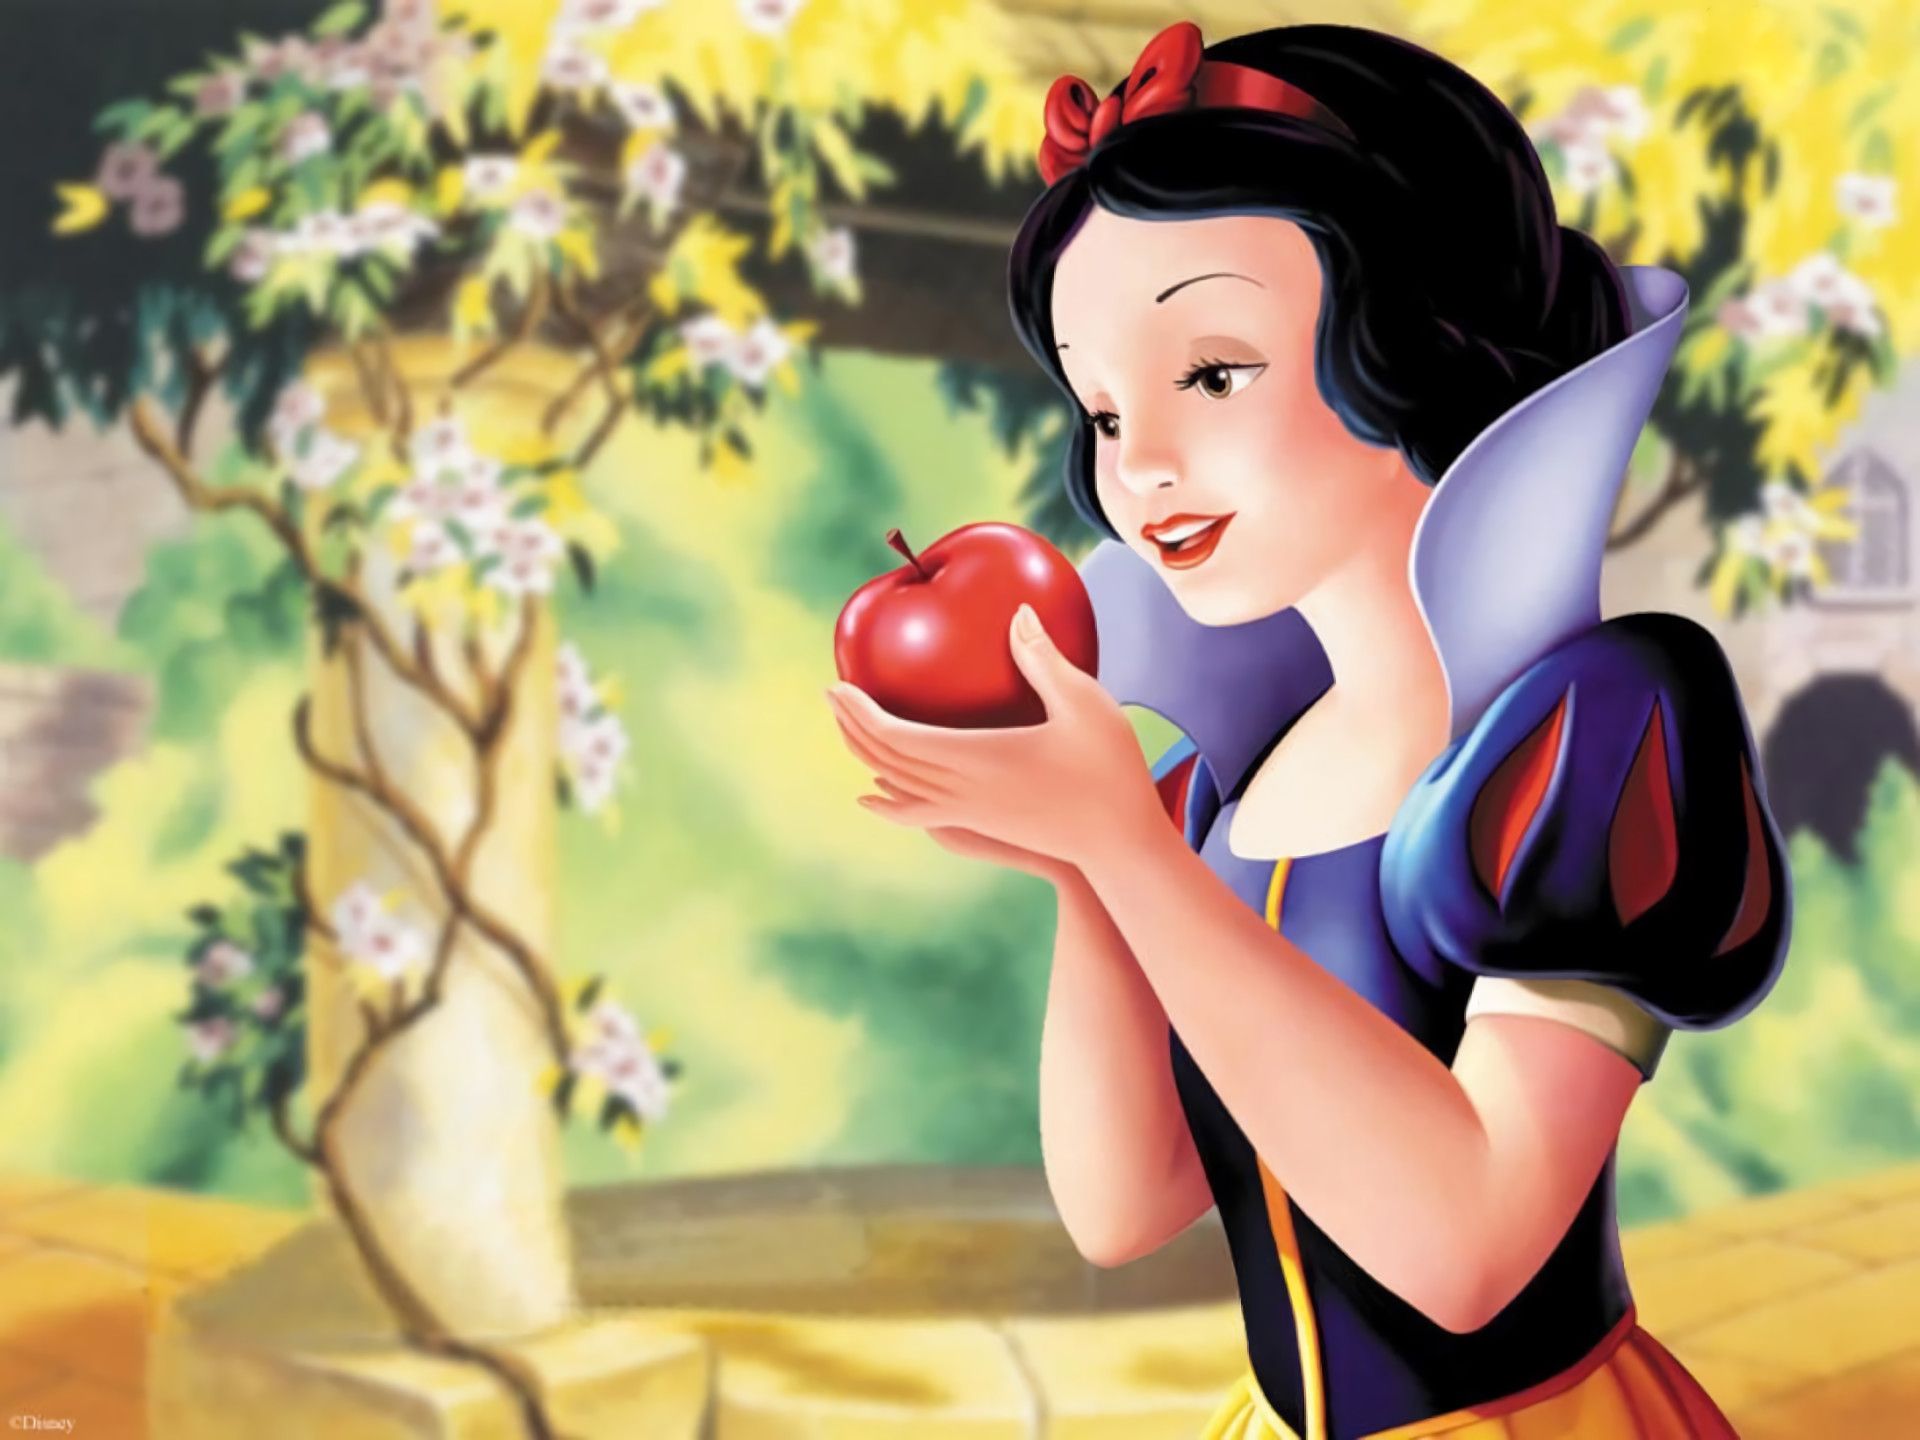 Snow White Wallpaper background picture